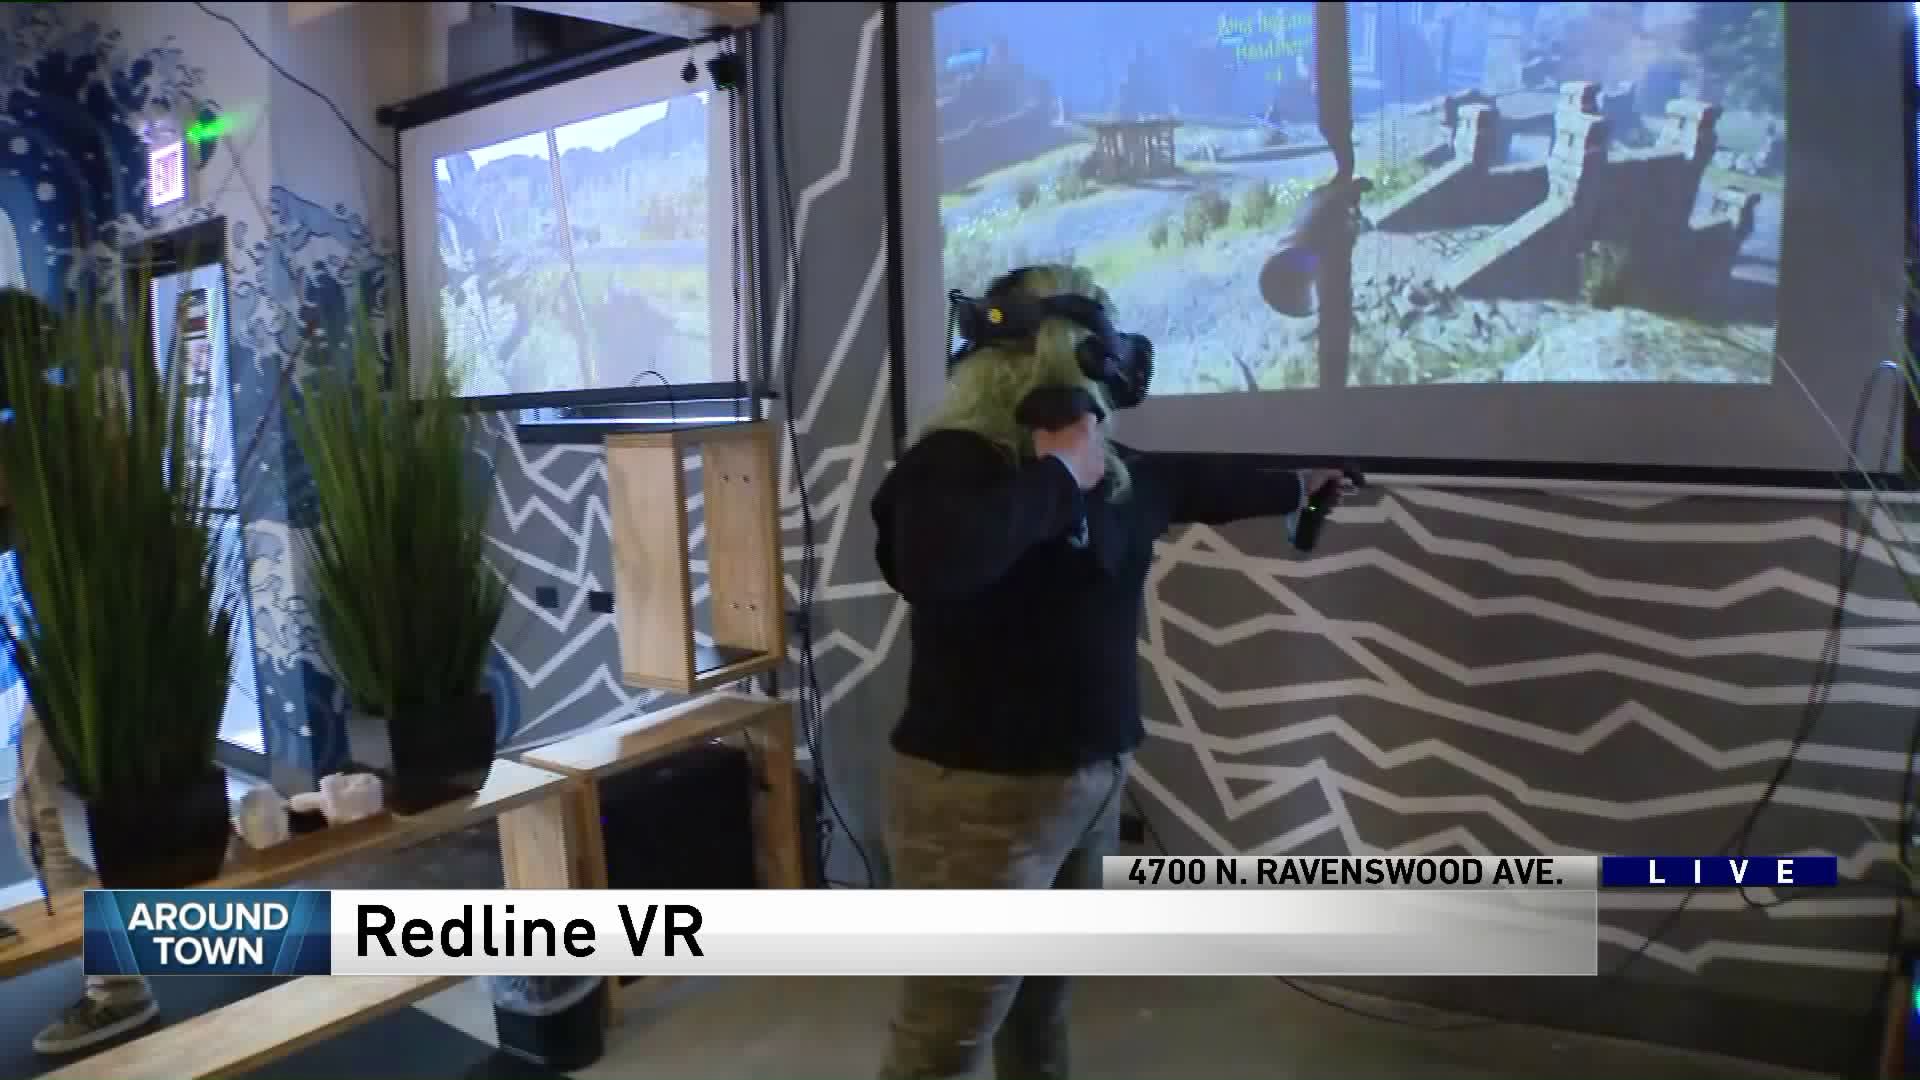 Around Town checks out Redline VR